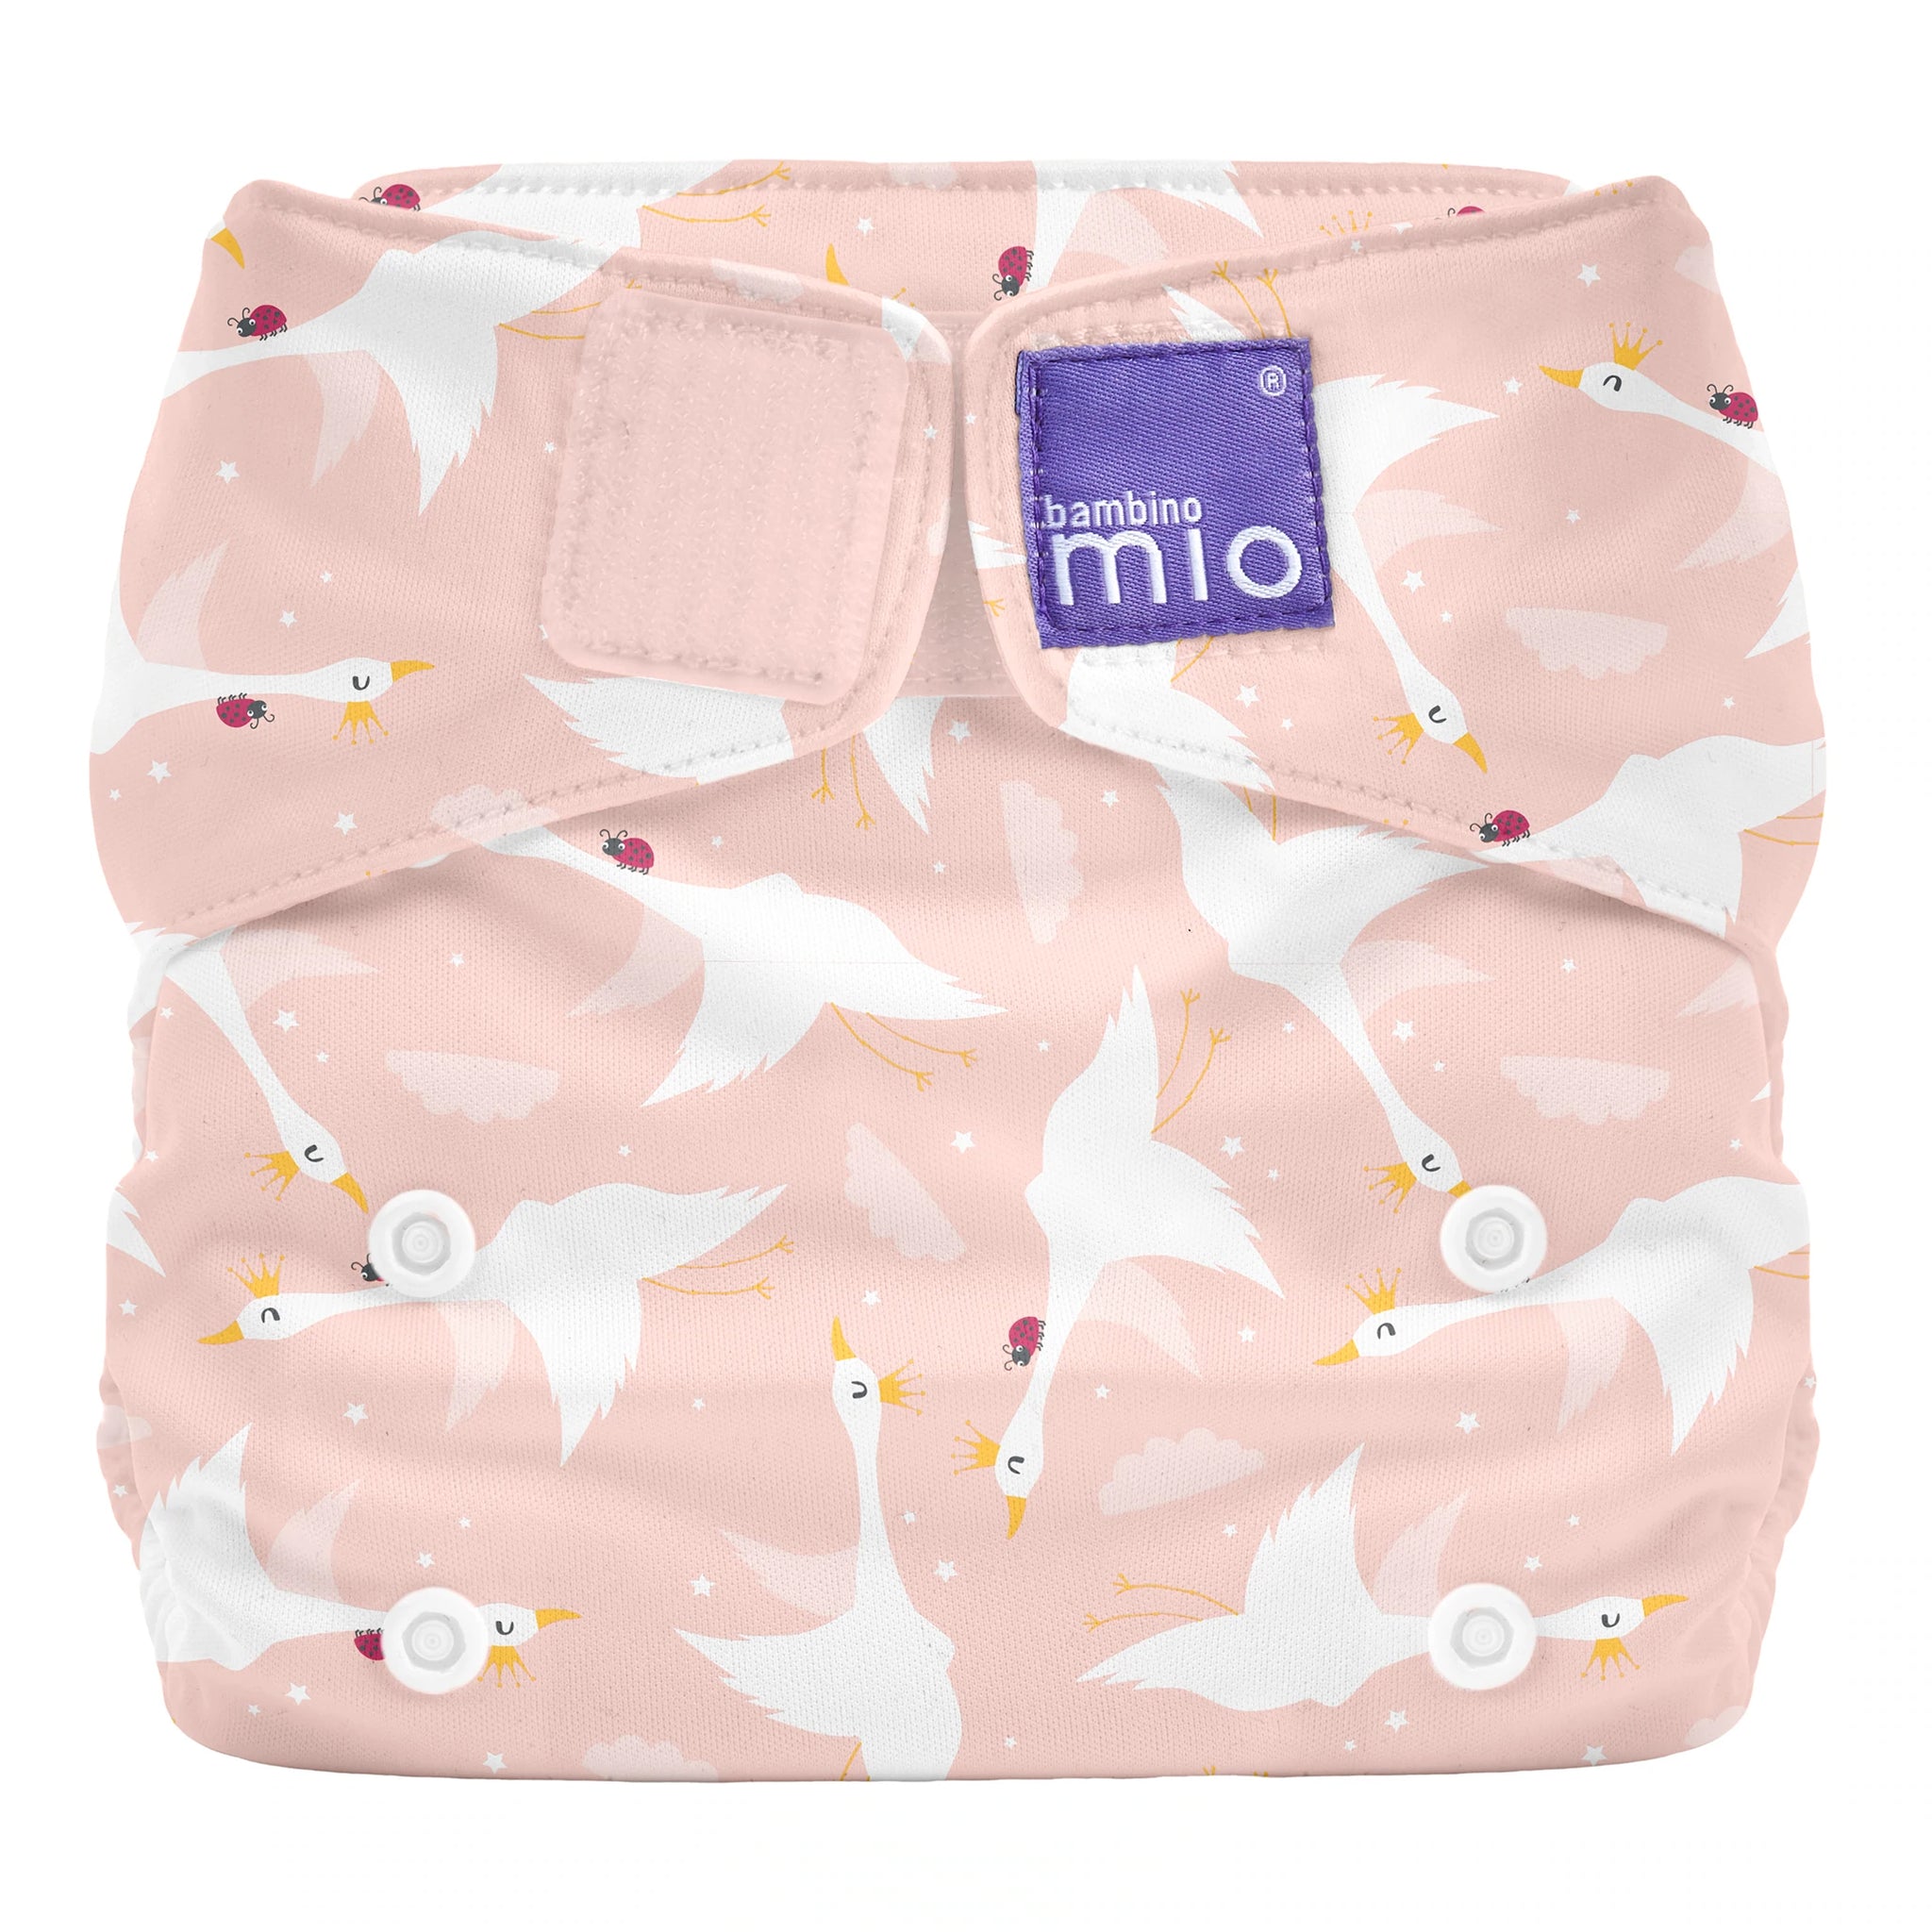 Bambino Mio Reusable Potty Training Pants Plain Light Pink – 1